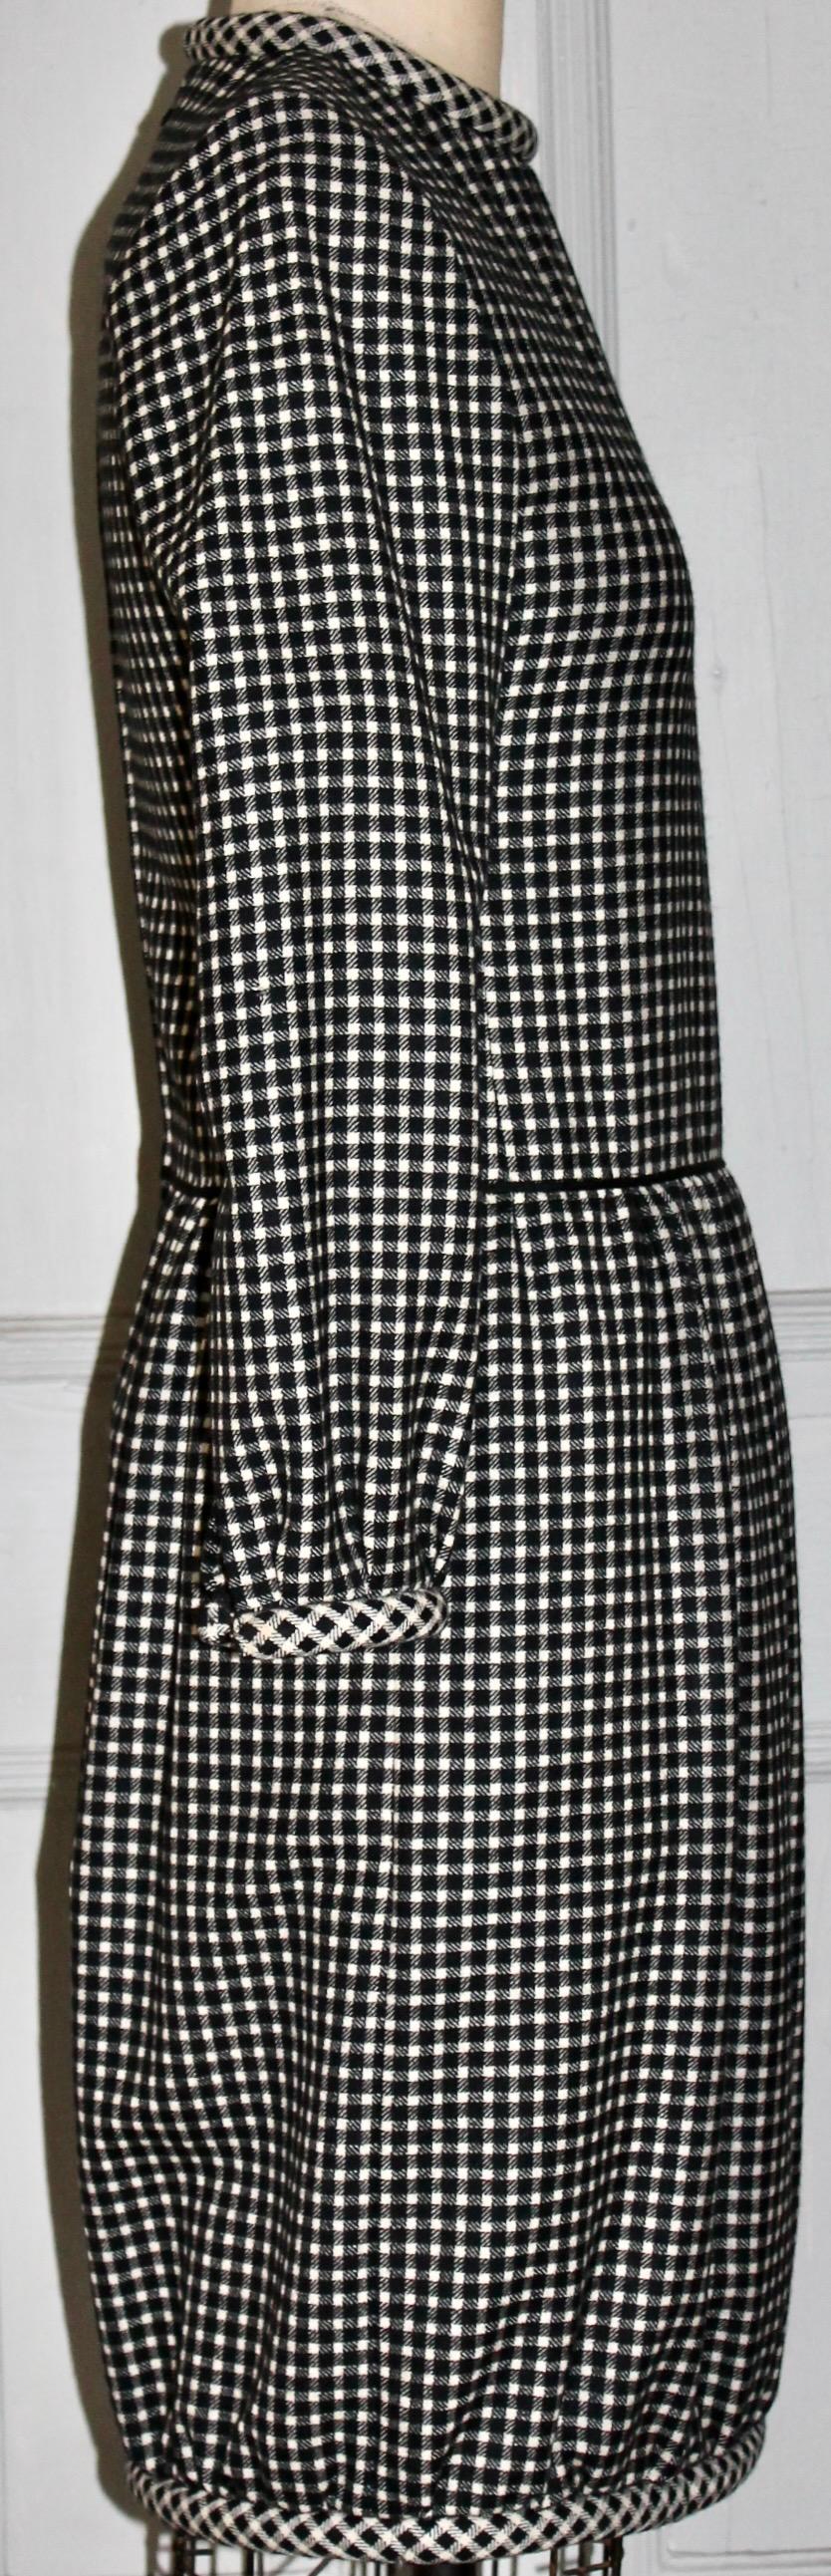 Women's Nina Ricci 'Boutique' Paris Black and White Wool Dress For Sale